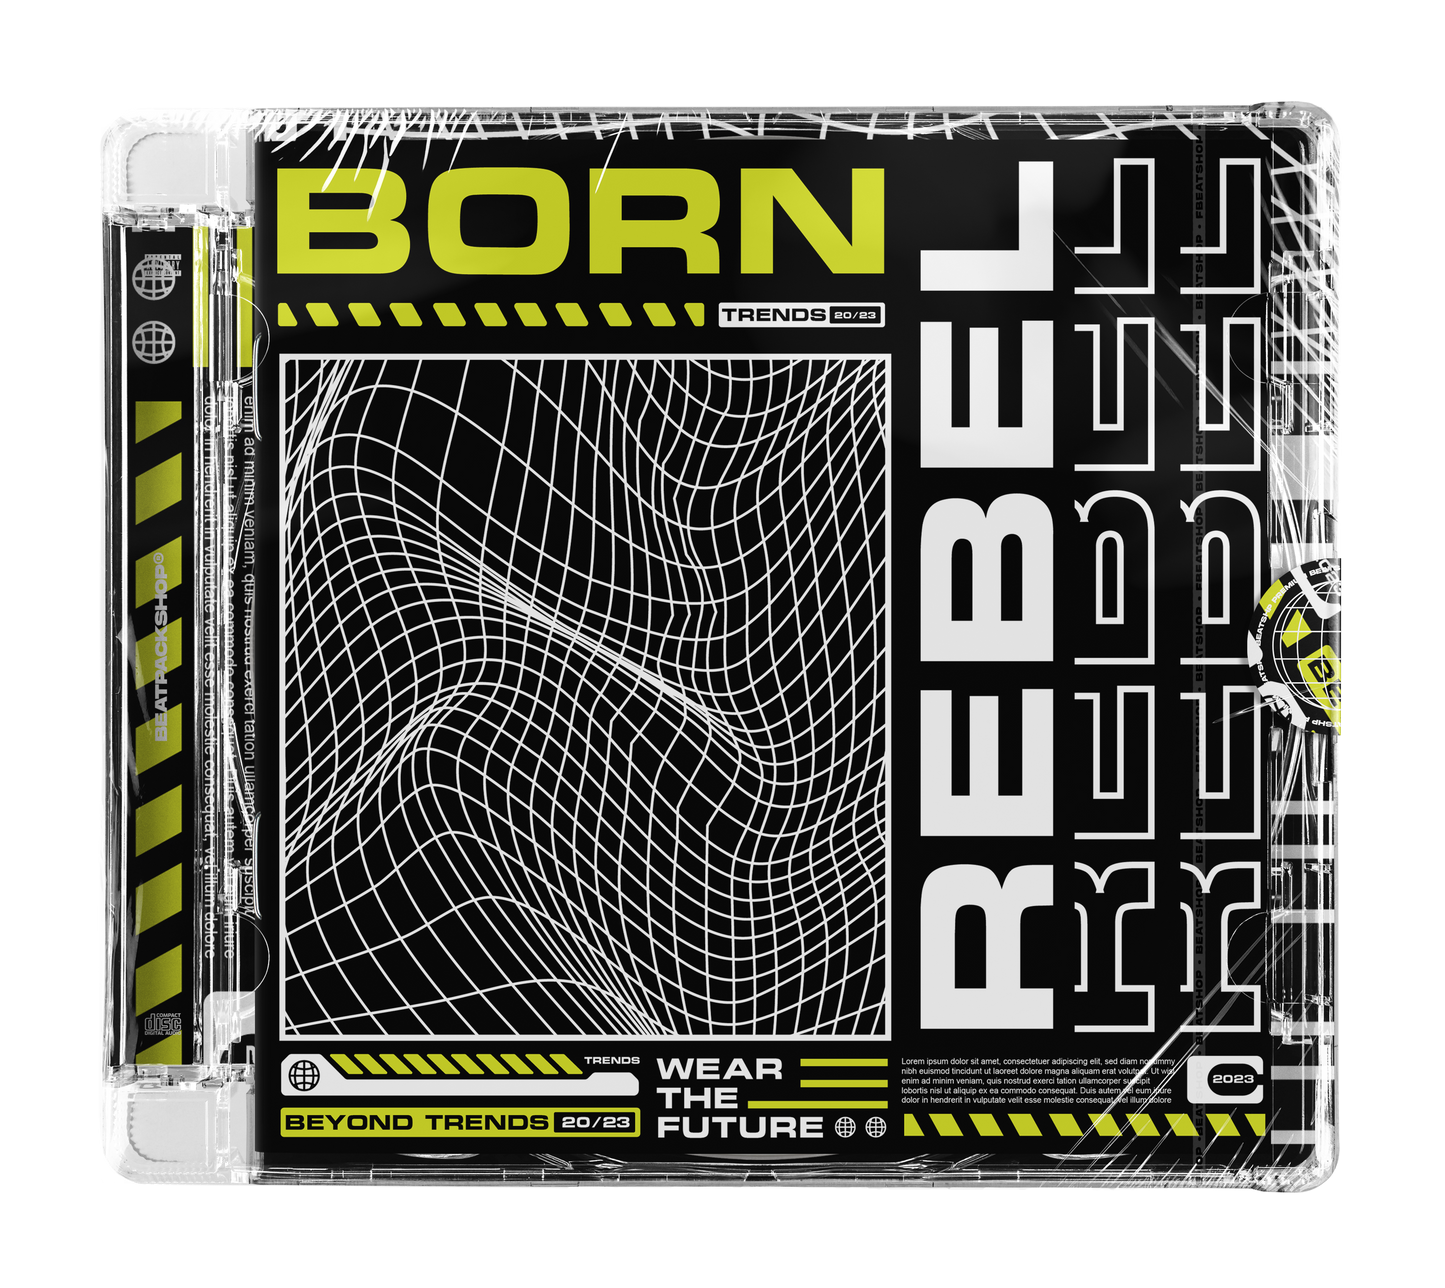 BORN - Afrobeats Pack